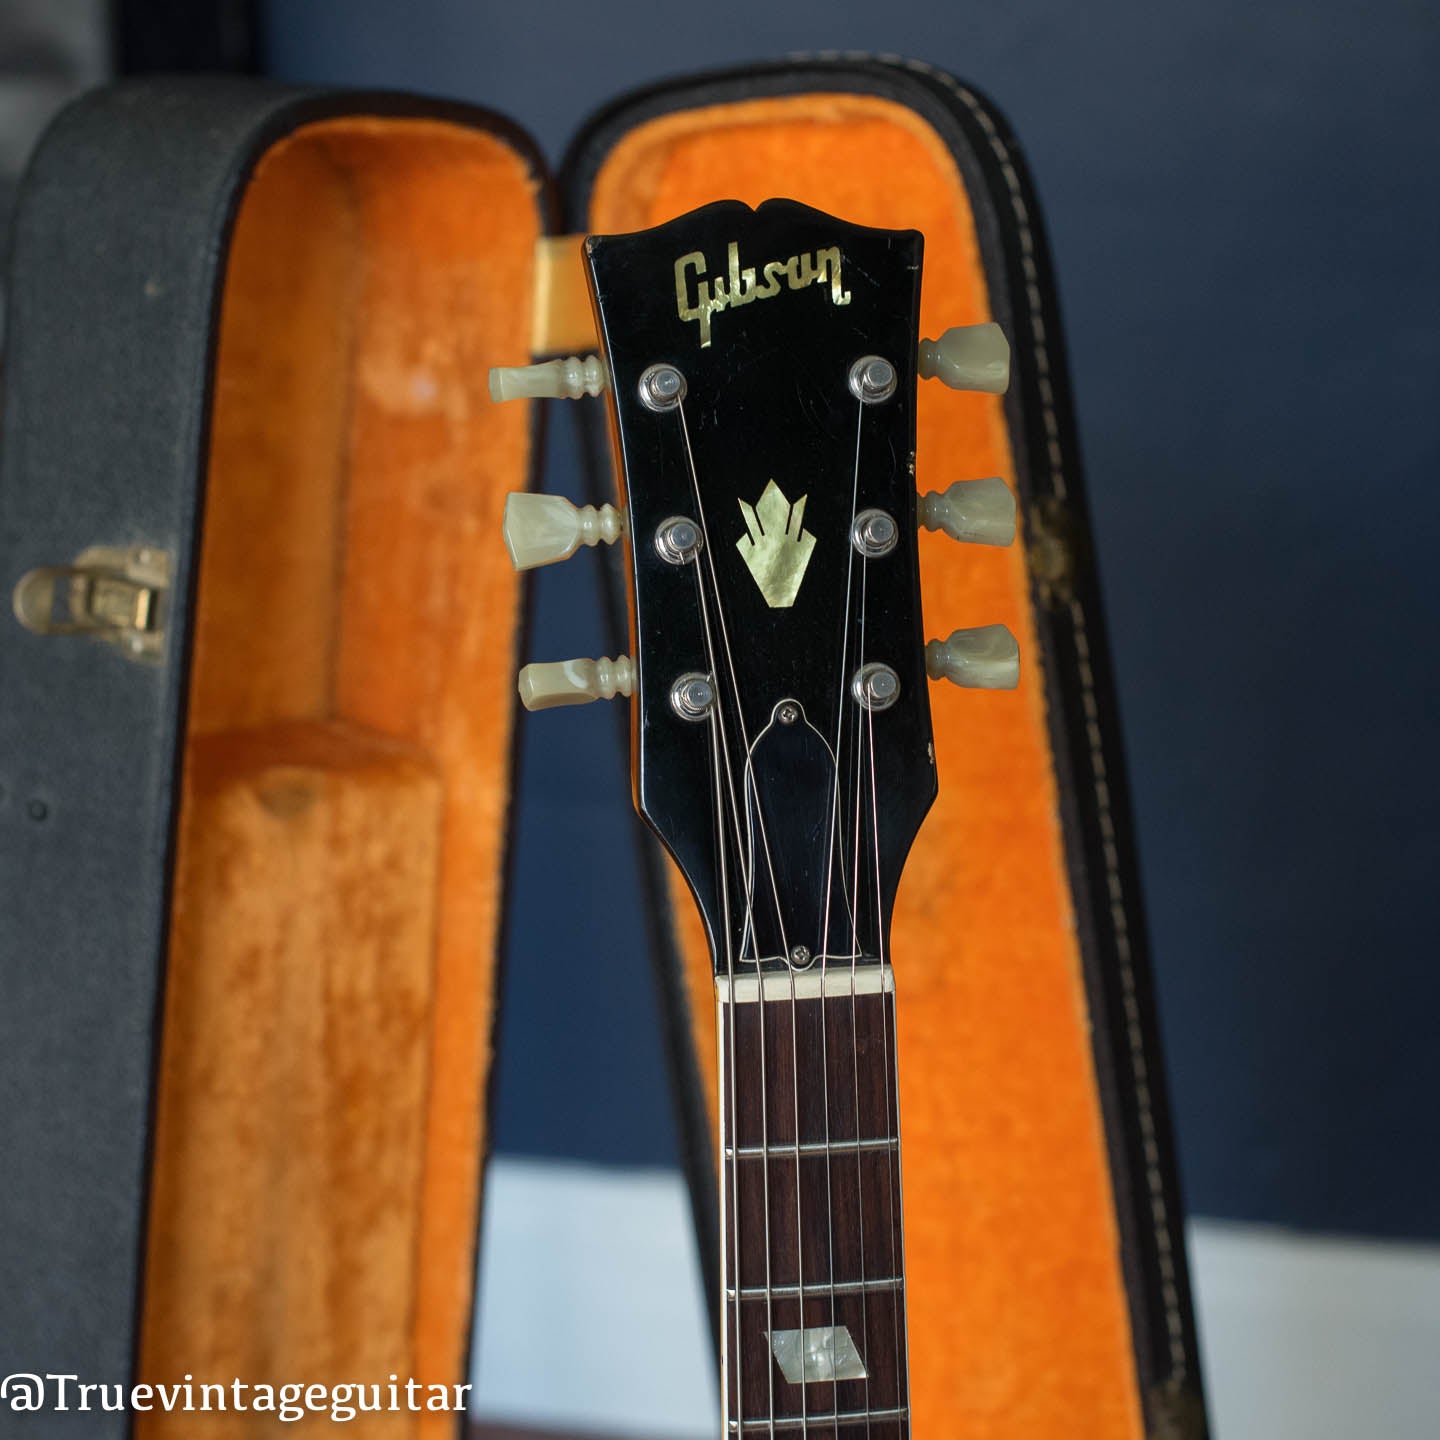 Headstock, block Gibson logo, Vintage 1969 Gibson ES-335 td electric guitar